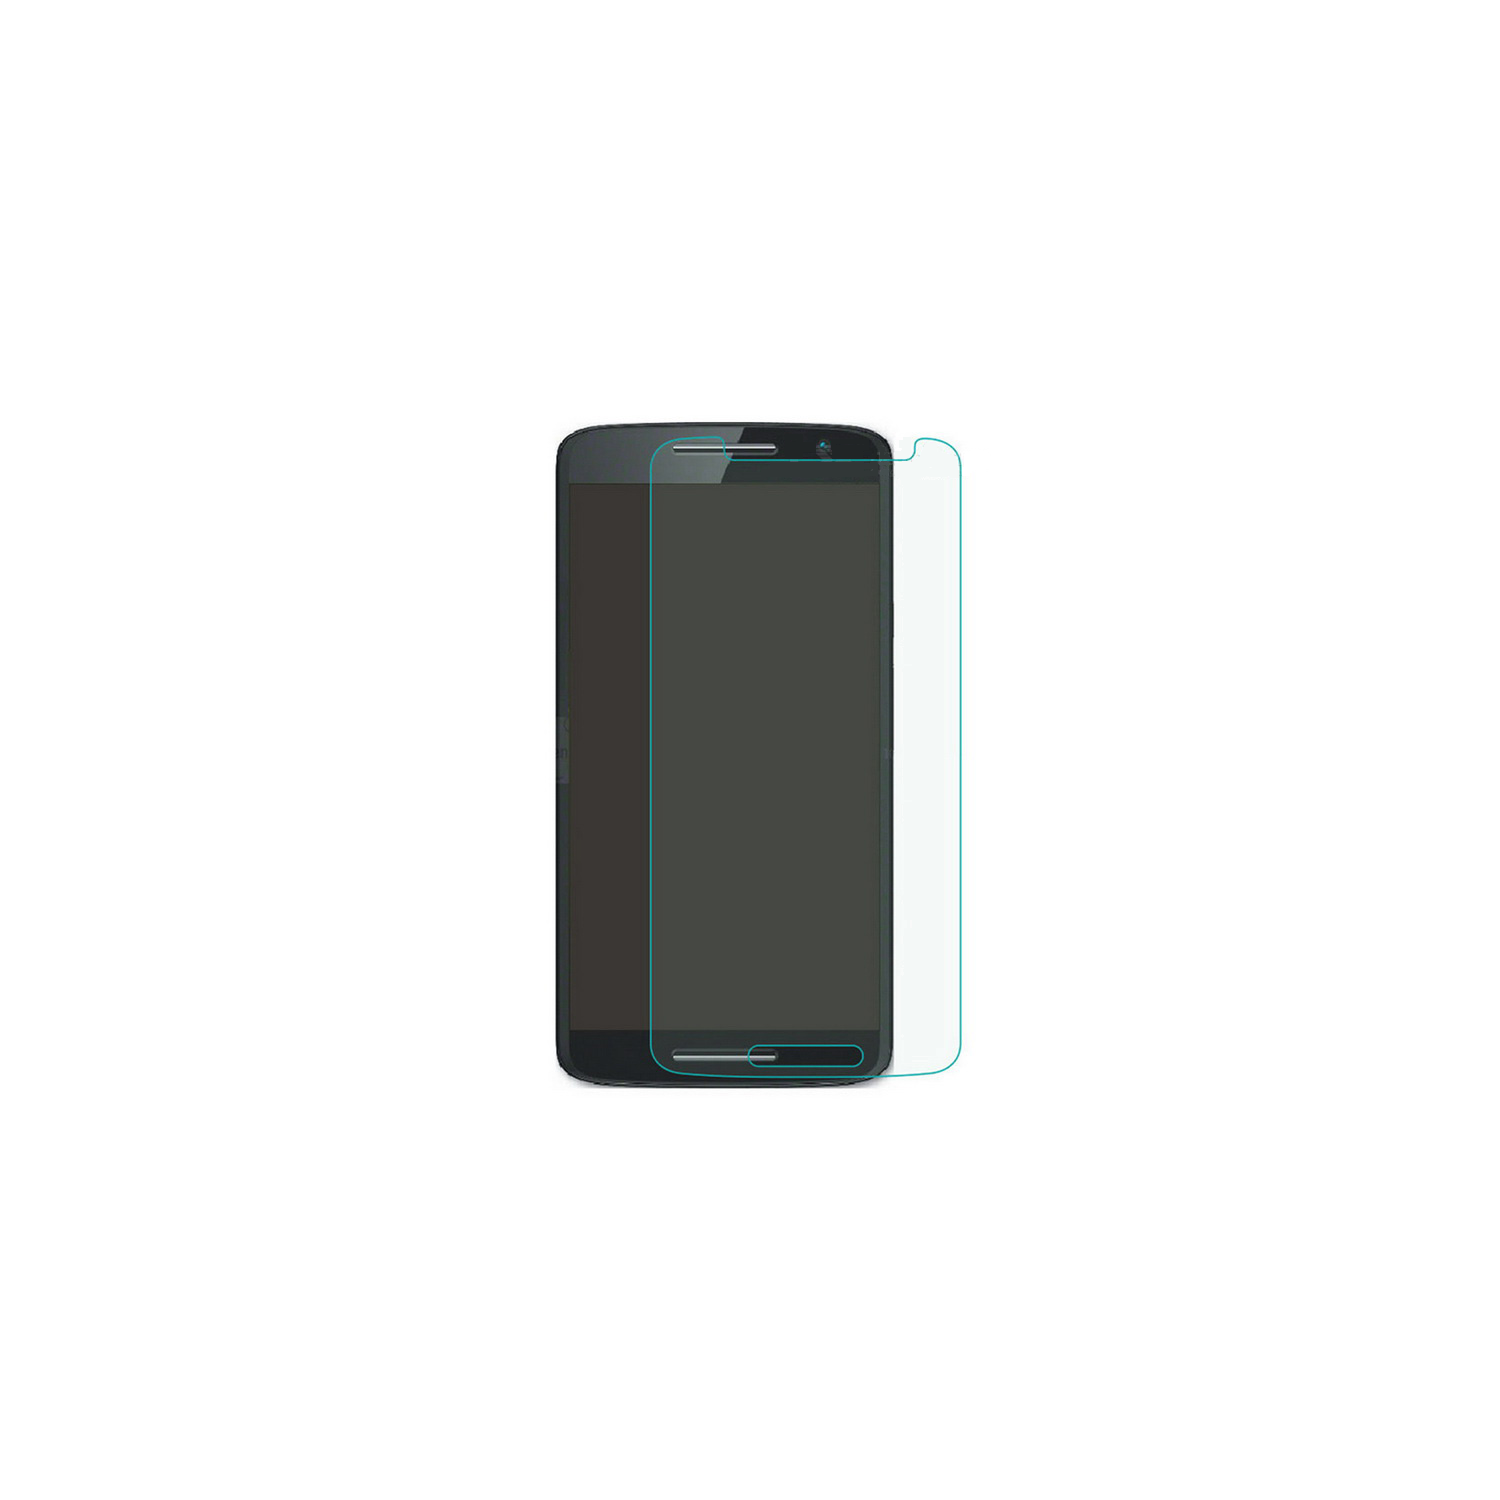 Motorola Moto X Play - Premium Real Tempered Glass Screen Protector Film [Pro-Mobile]